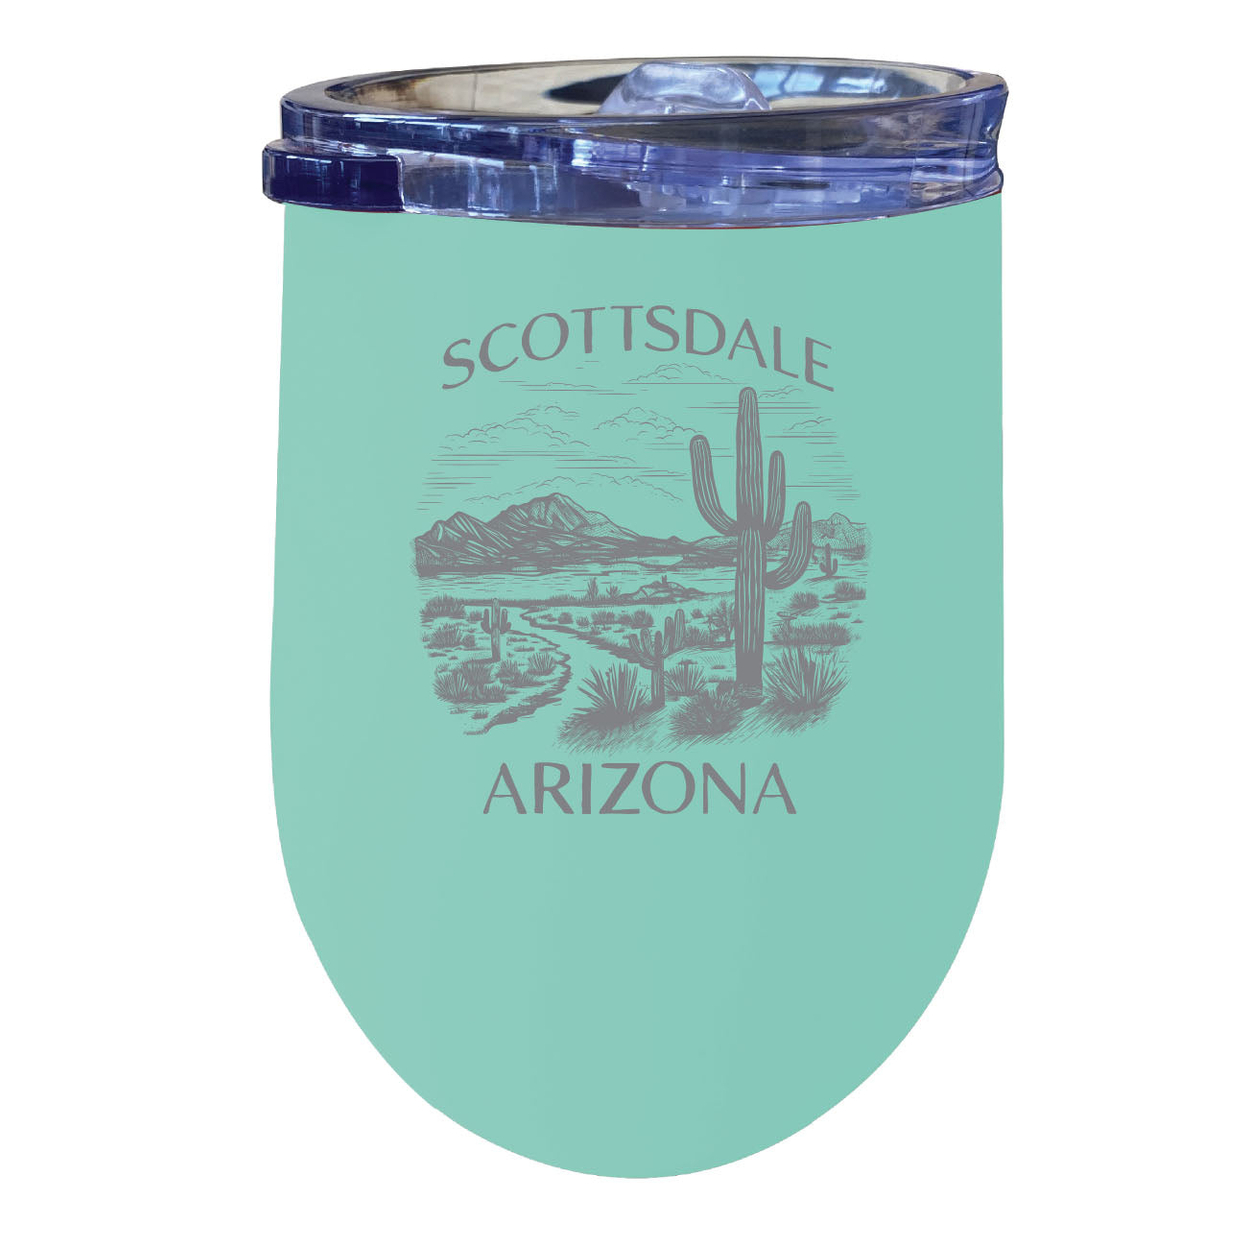 Scottsdale Arizona Souvenir 12 Oz Engraved Insulated Wine Stainless Steel Tumbler - Rainbow Glitter Gray,,4-Pack